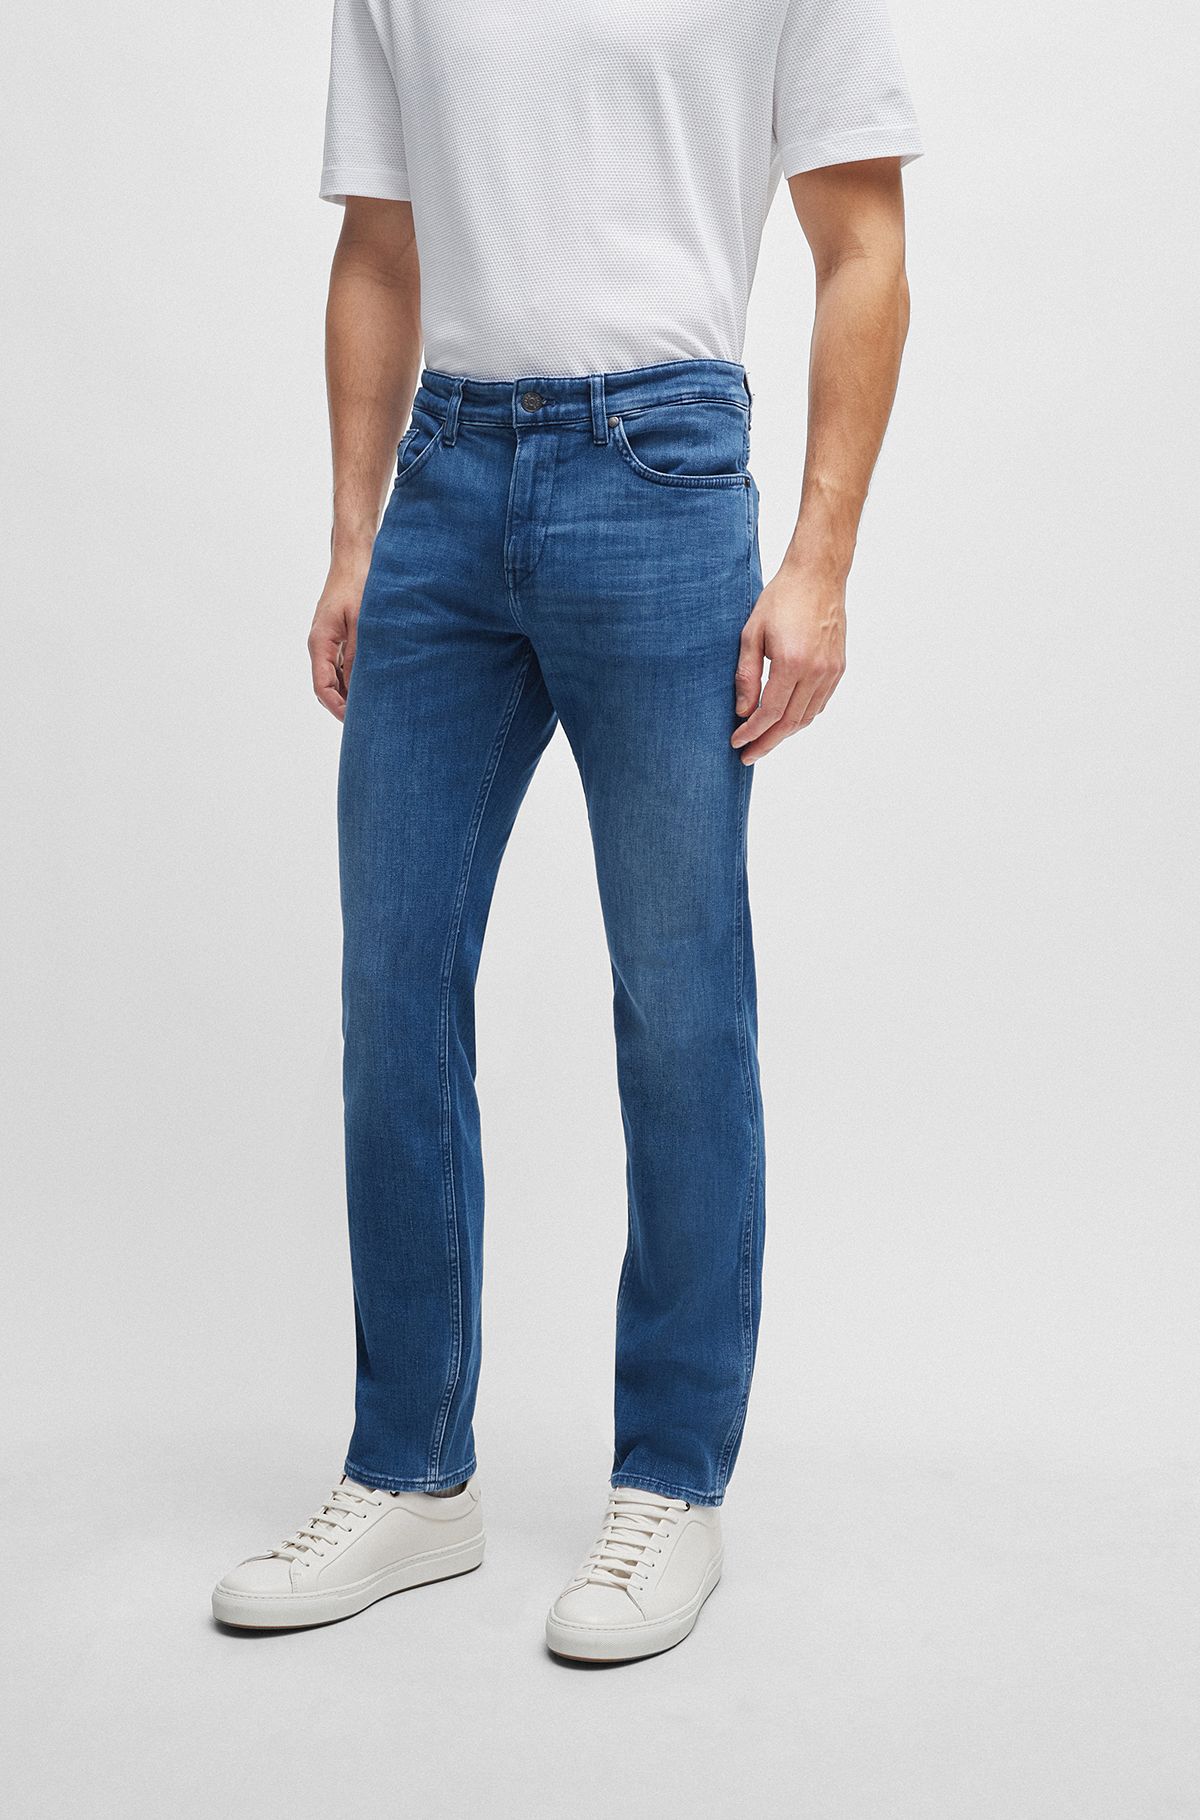 - cashmere-touch denim in jeans blue Slim-fit BOSS Italian